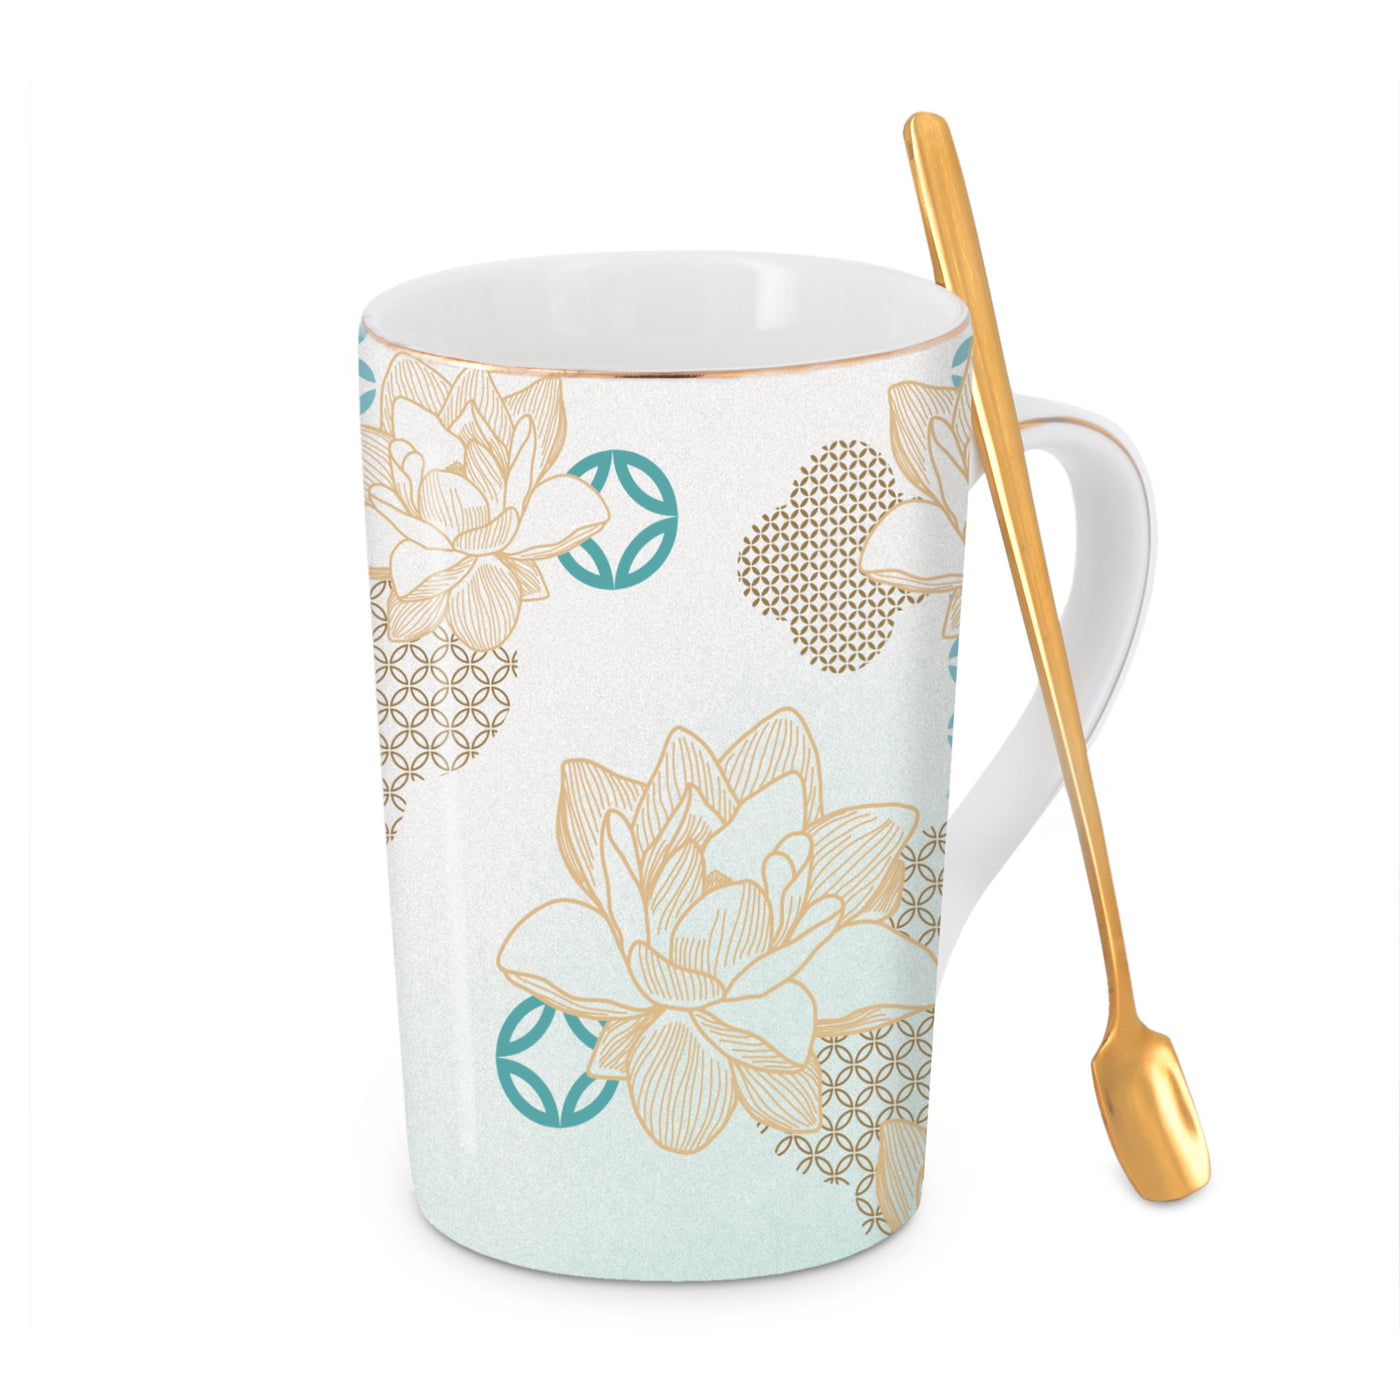 SCENE SHANG x Grandma Lotus Limited Edition Porcelain Mug